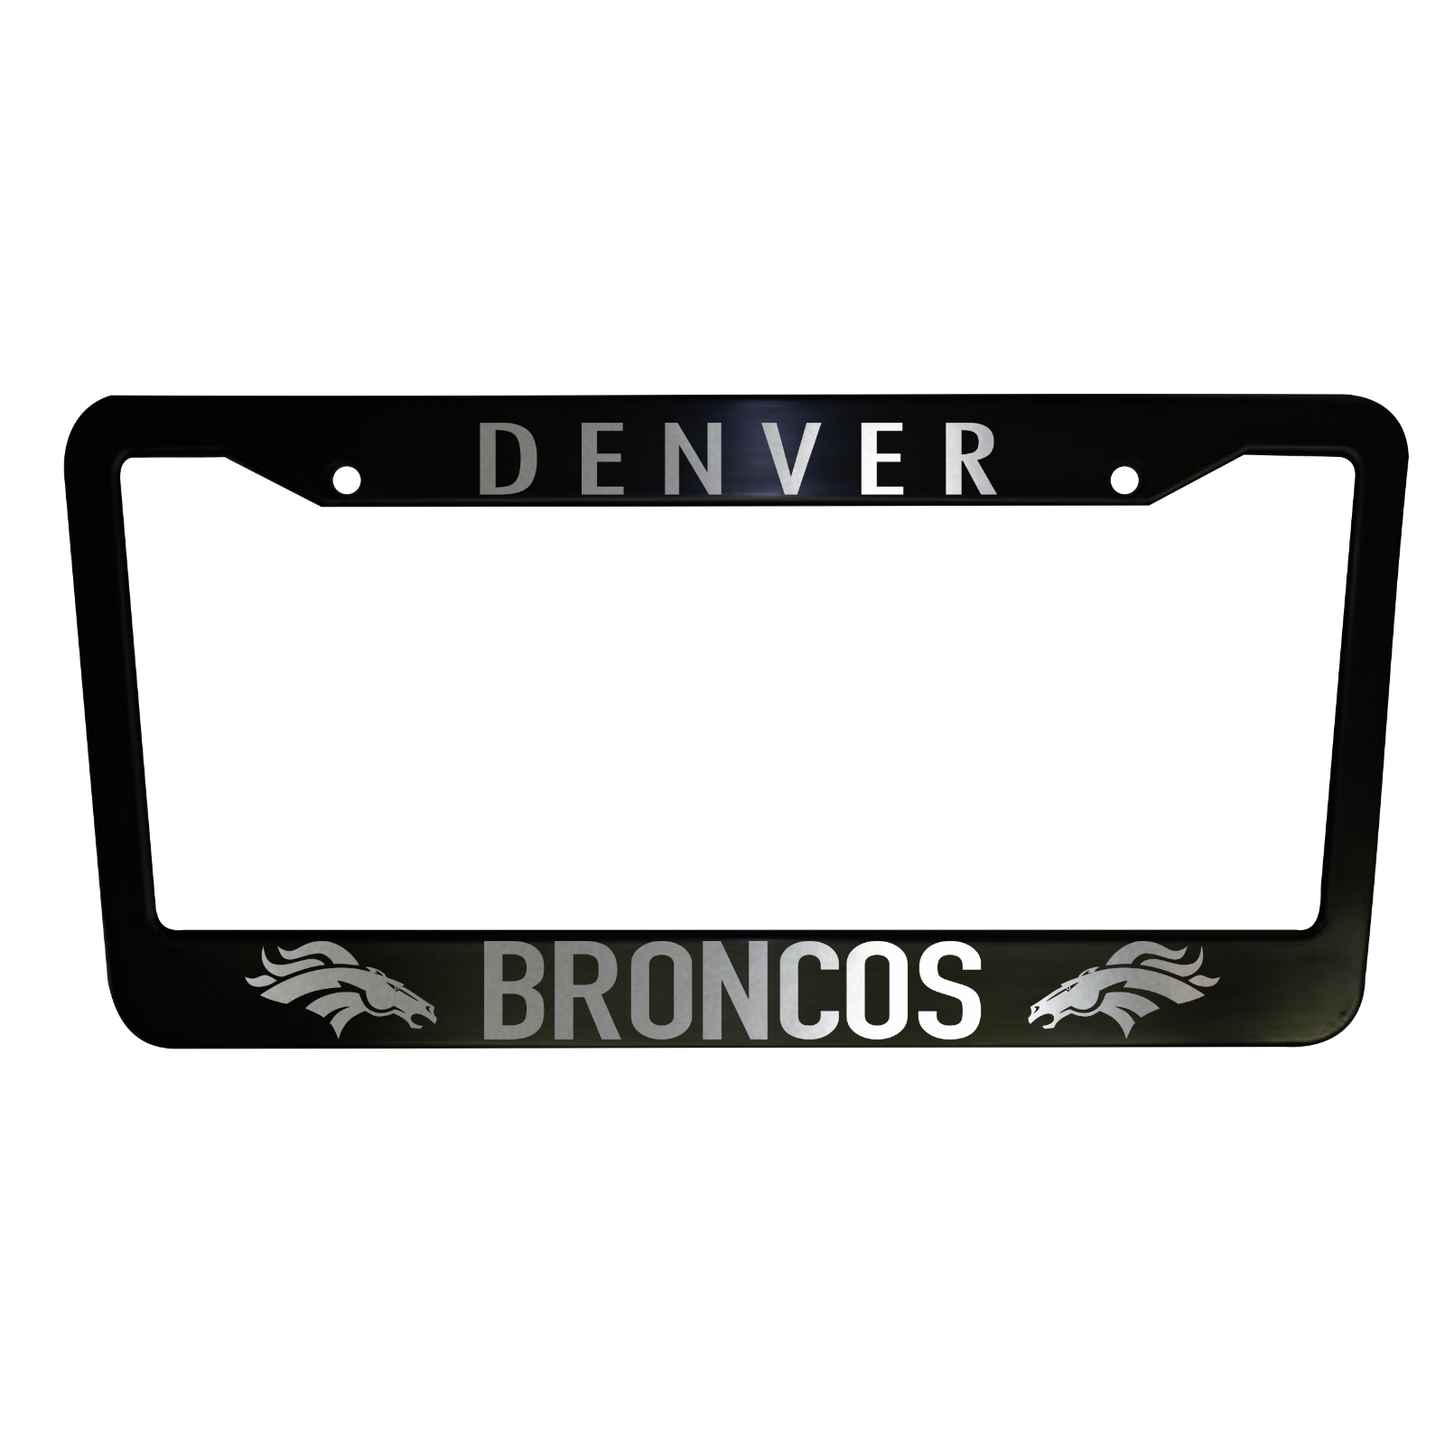 Set of 2 Denver Broncos Black Plastic or Aluminum Car License Plate Frames Black Truck Parts Vehicle Accessories Car Decor